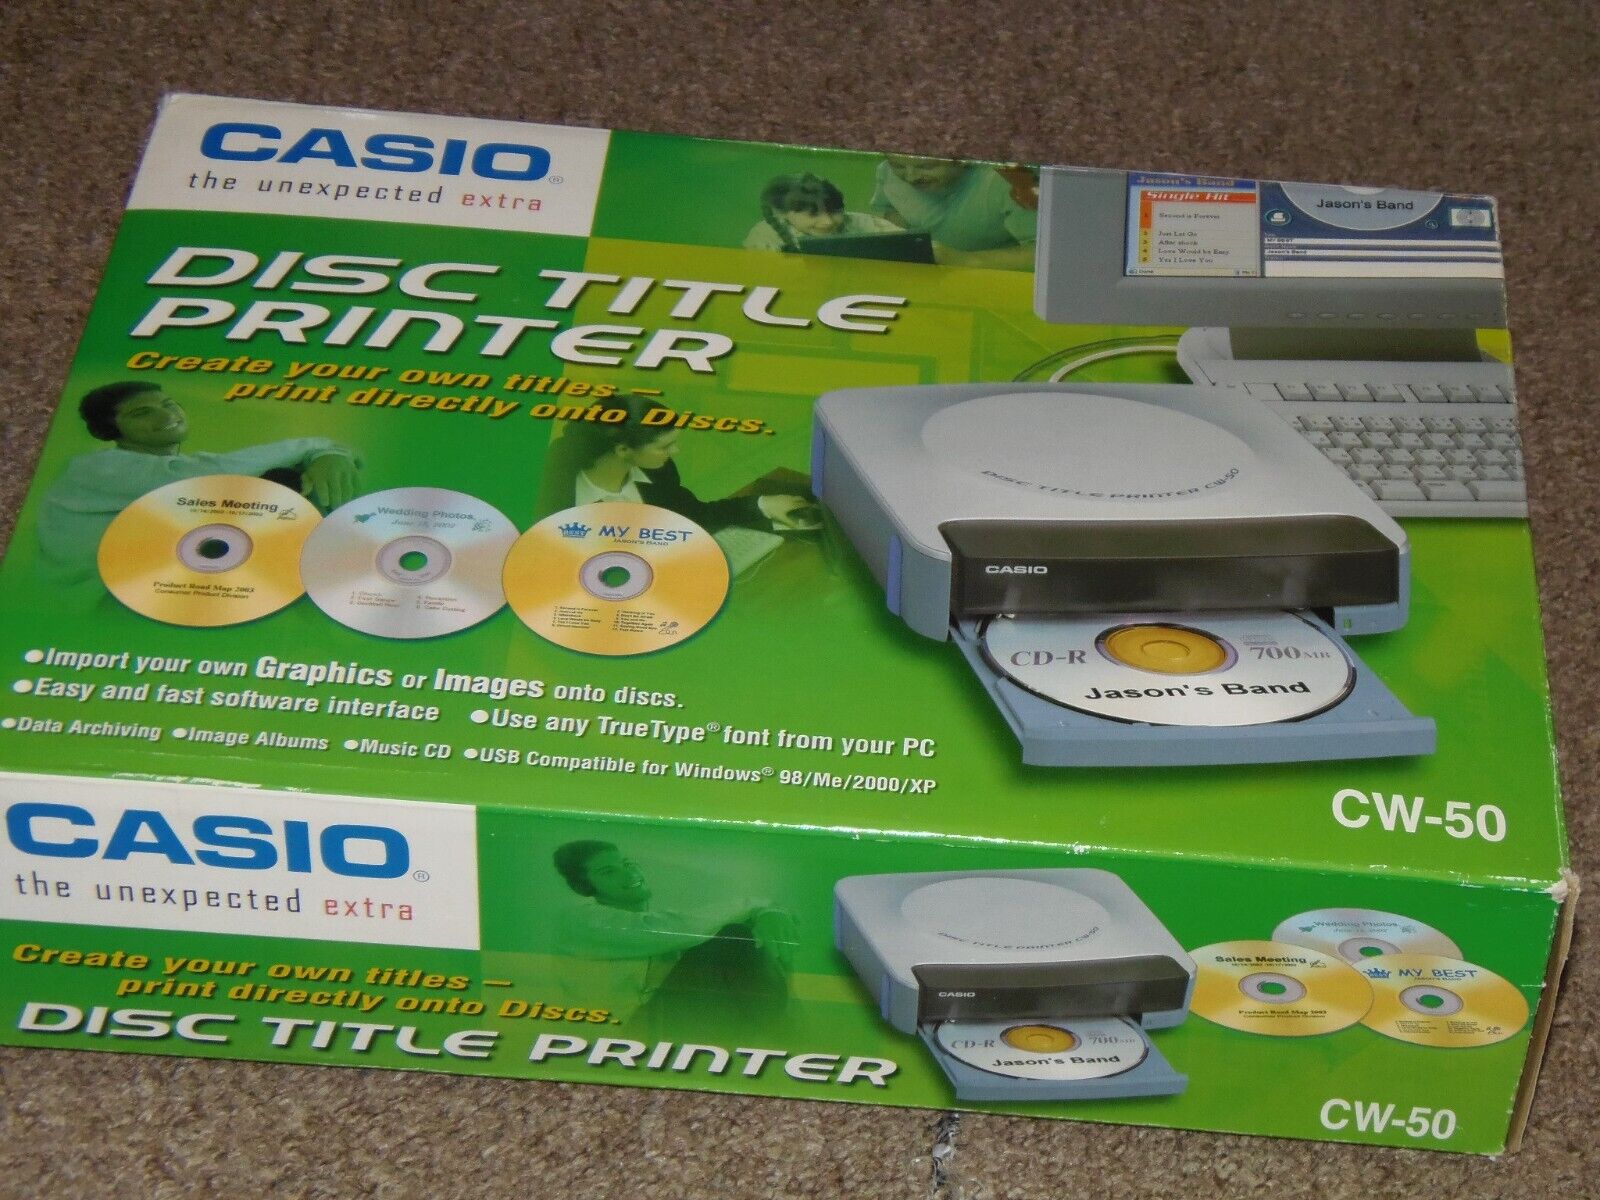 NEW Casio CW-50 CD/DVD Disc Title Printer